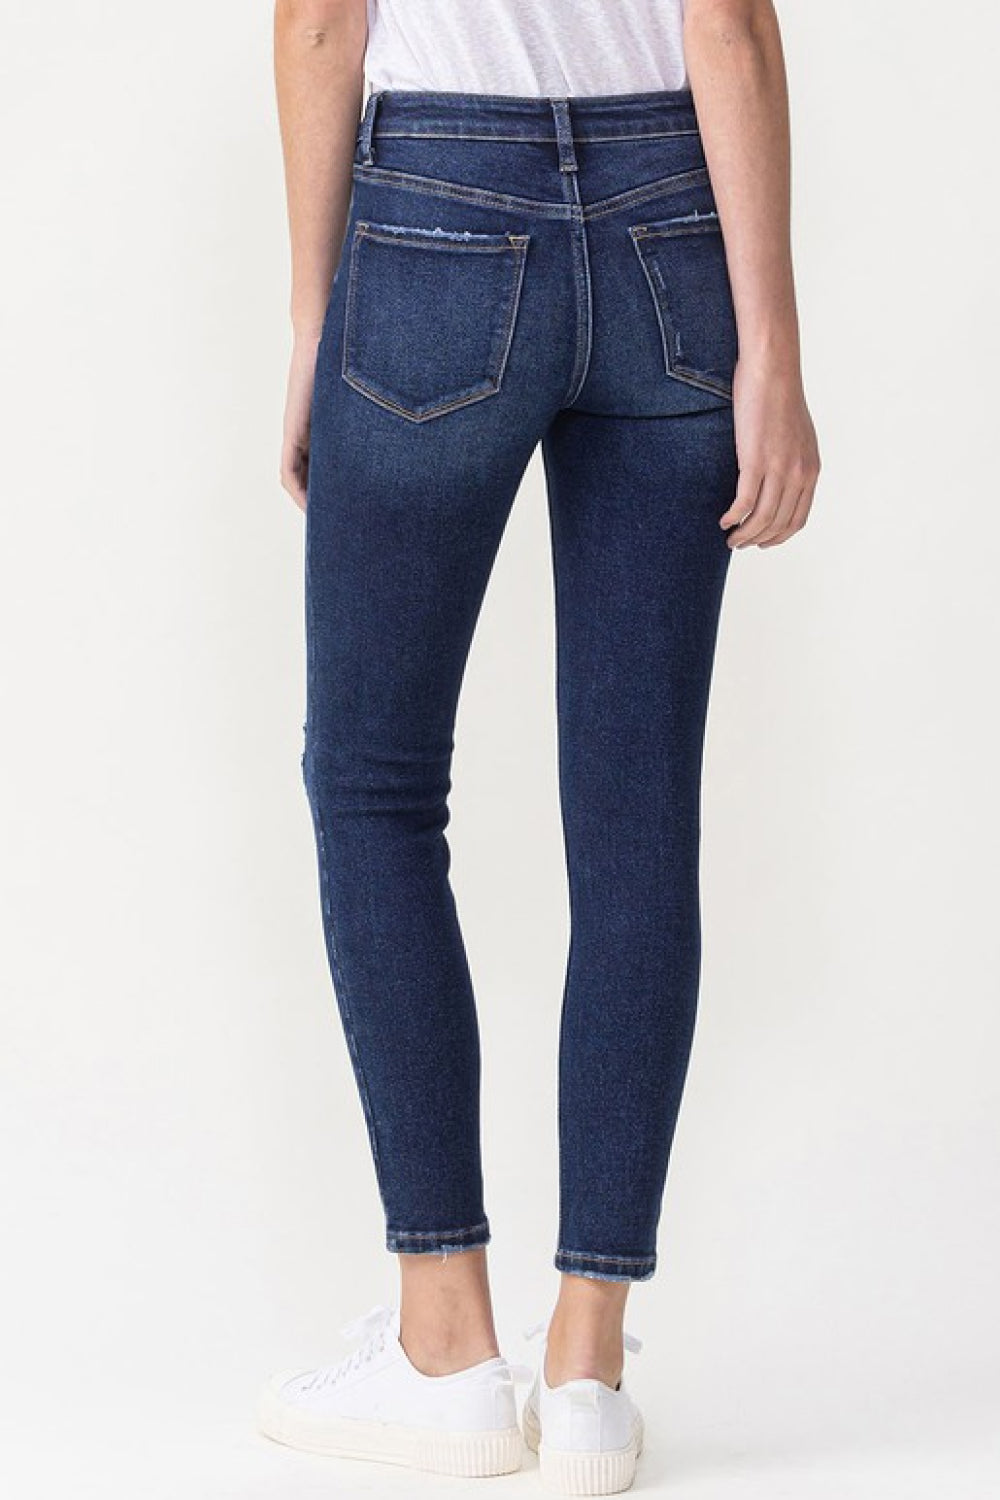 Lovervet Full Size Chelsea Midrise Crop Skinny Jeans - Make'm Blush Boutique 